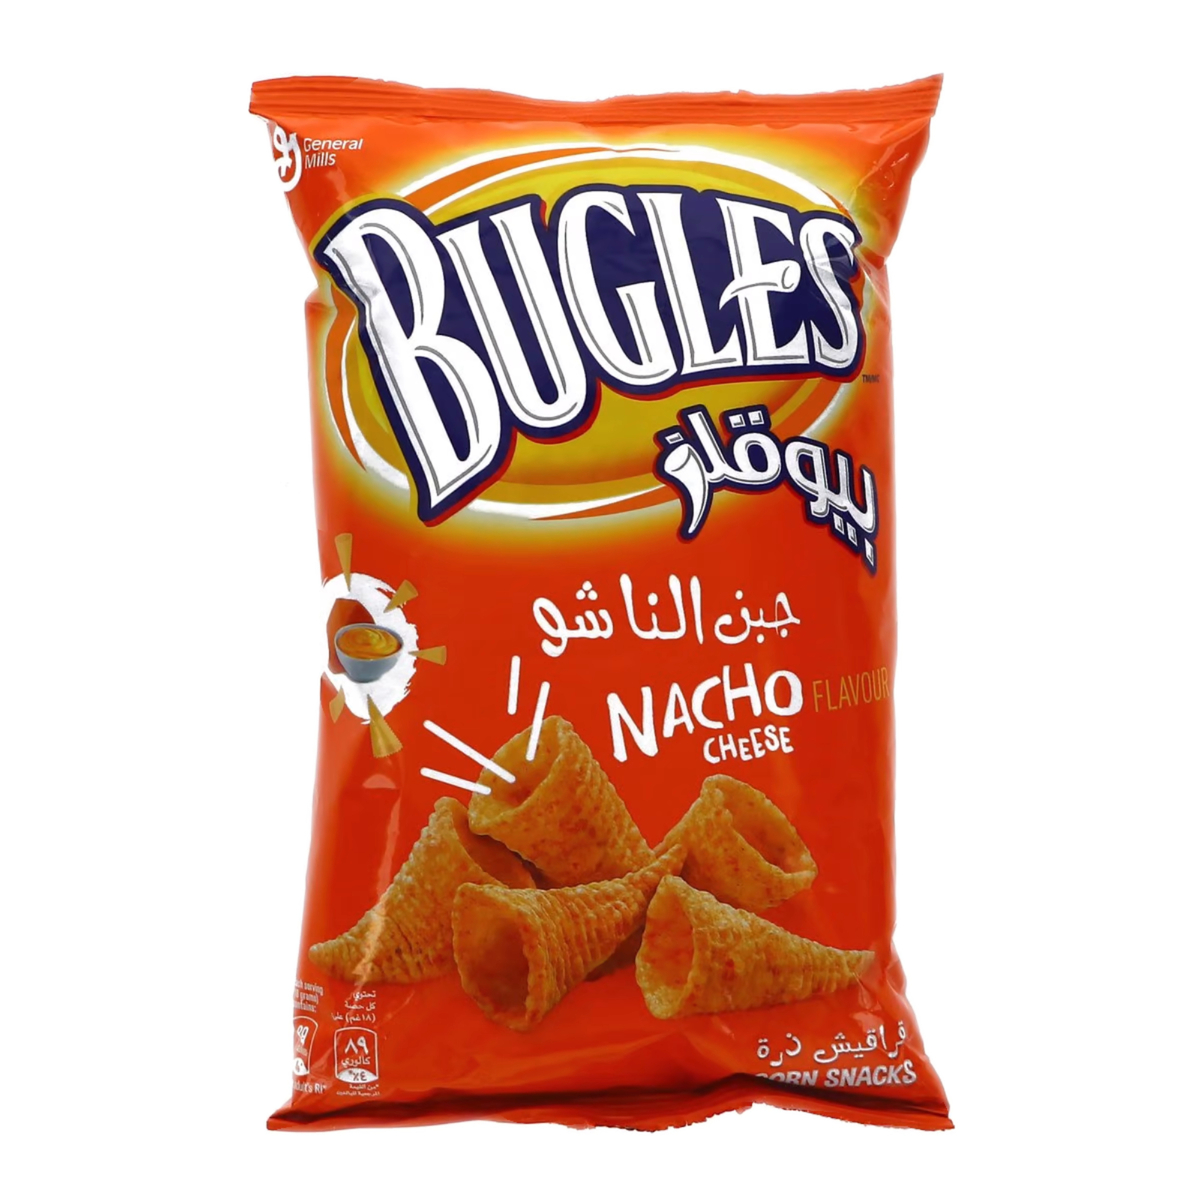 Bugles Corn Snacks Nacho Cheese 125g Online At Best Price Corn Based Bags Lulu Ksa 3548